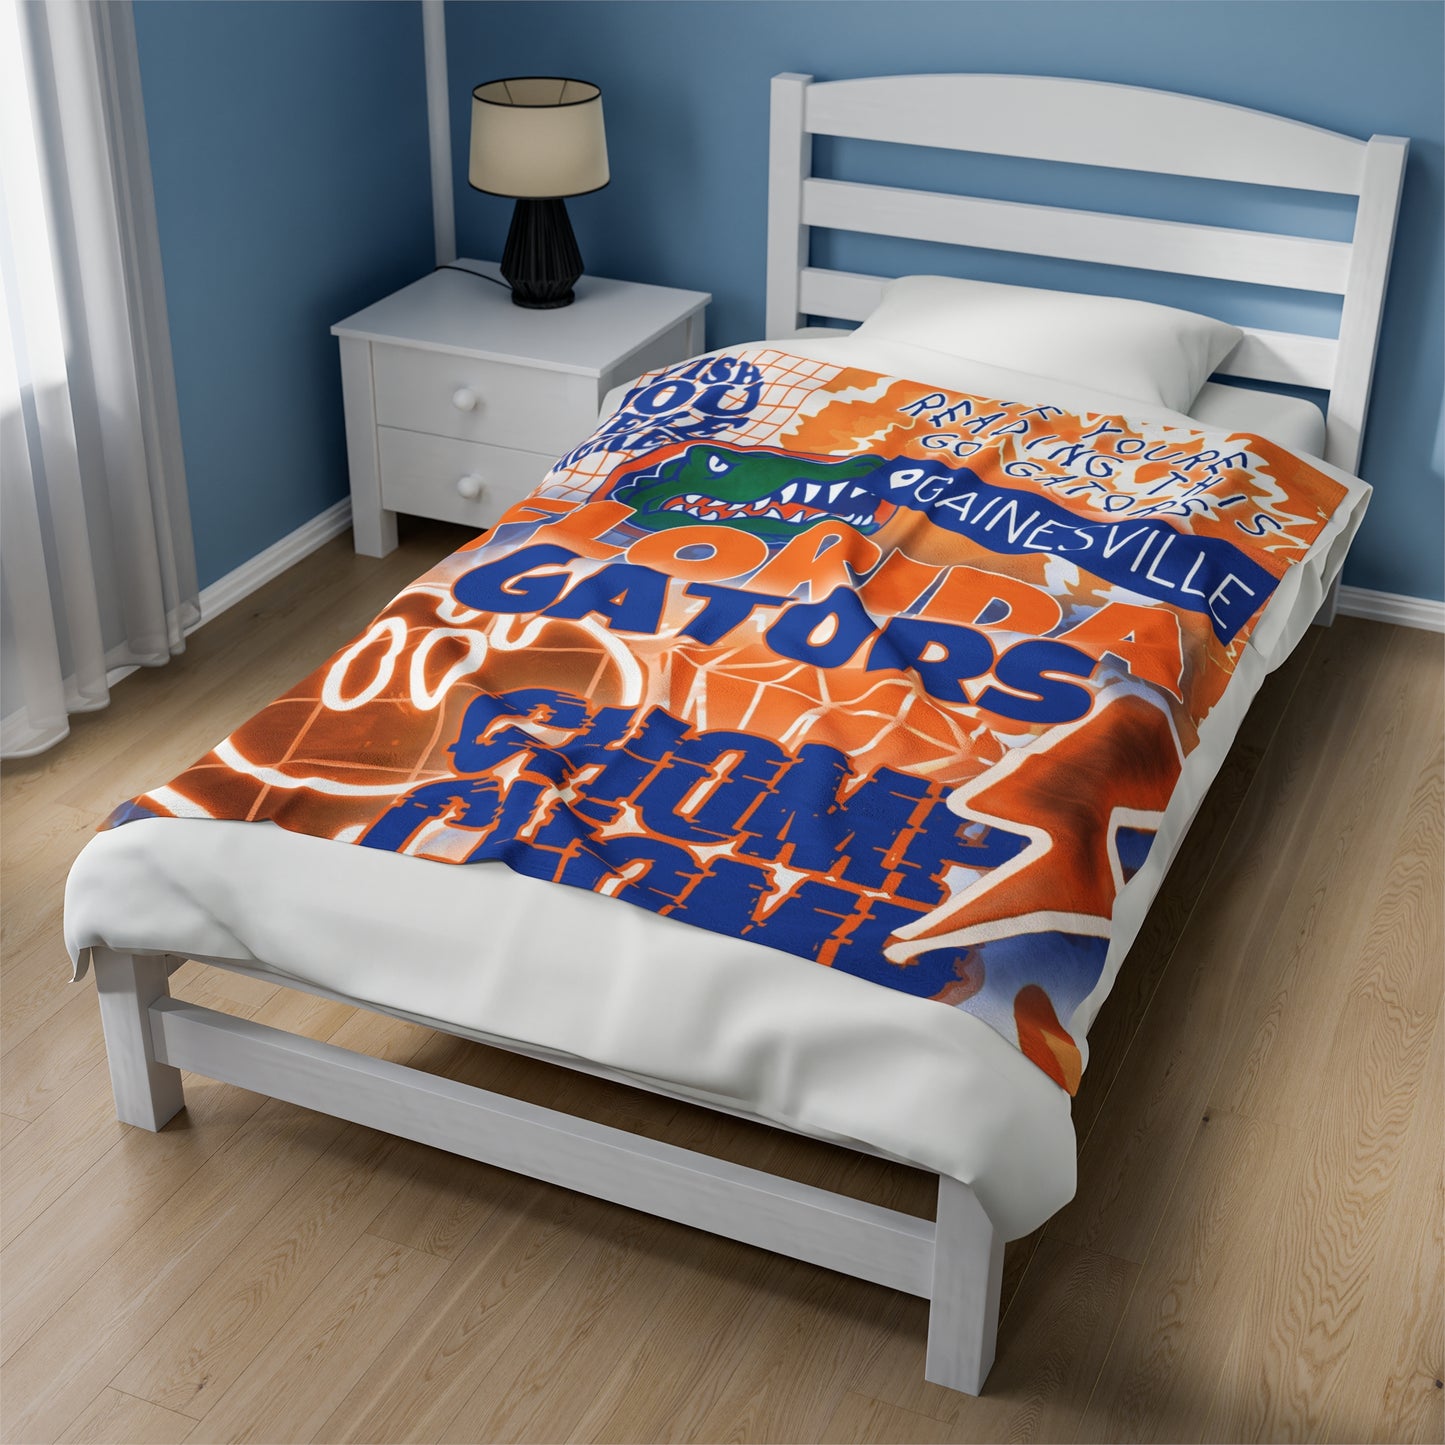 University of Florida College Blanket